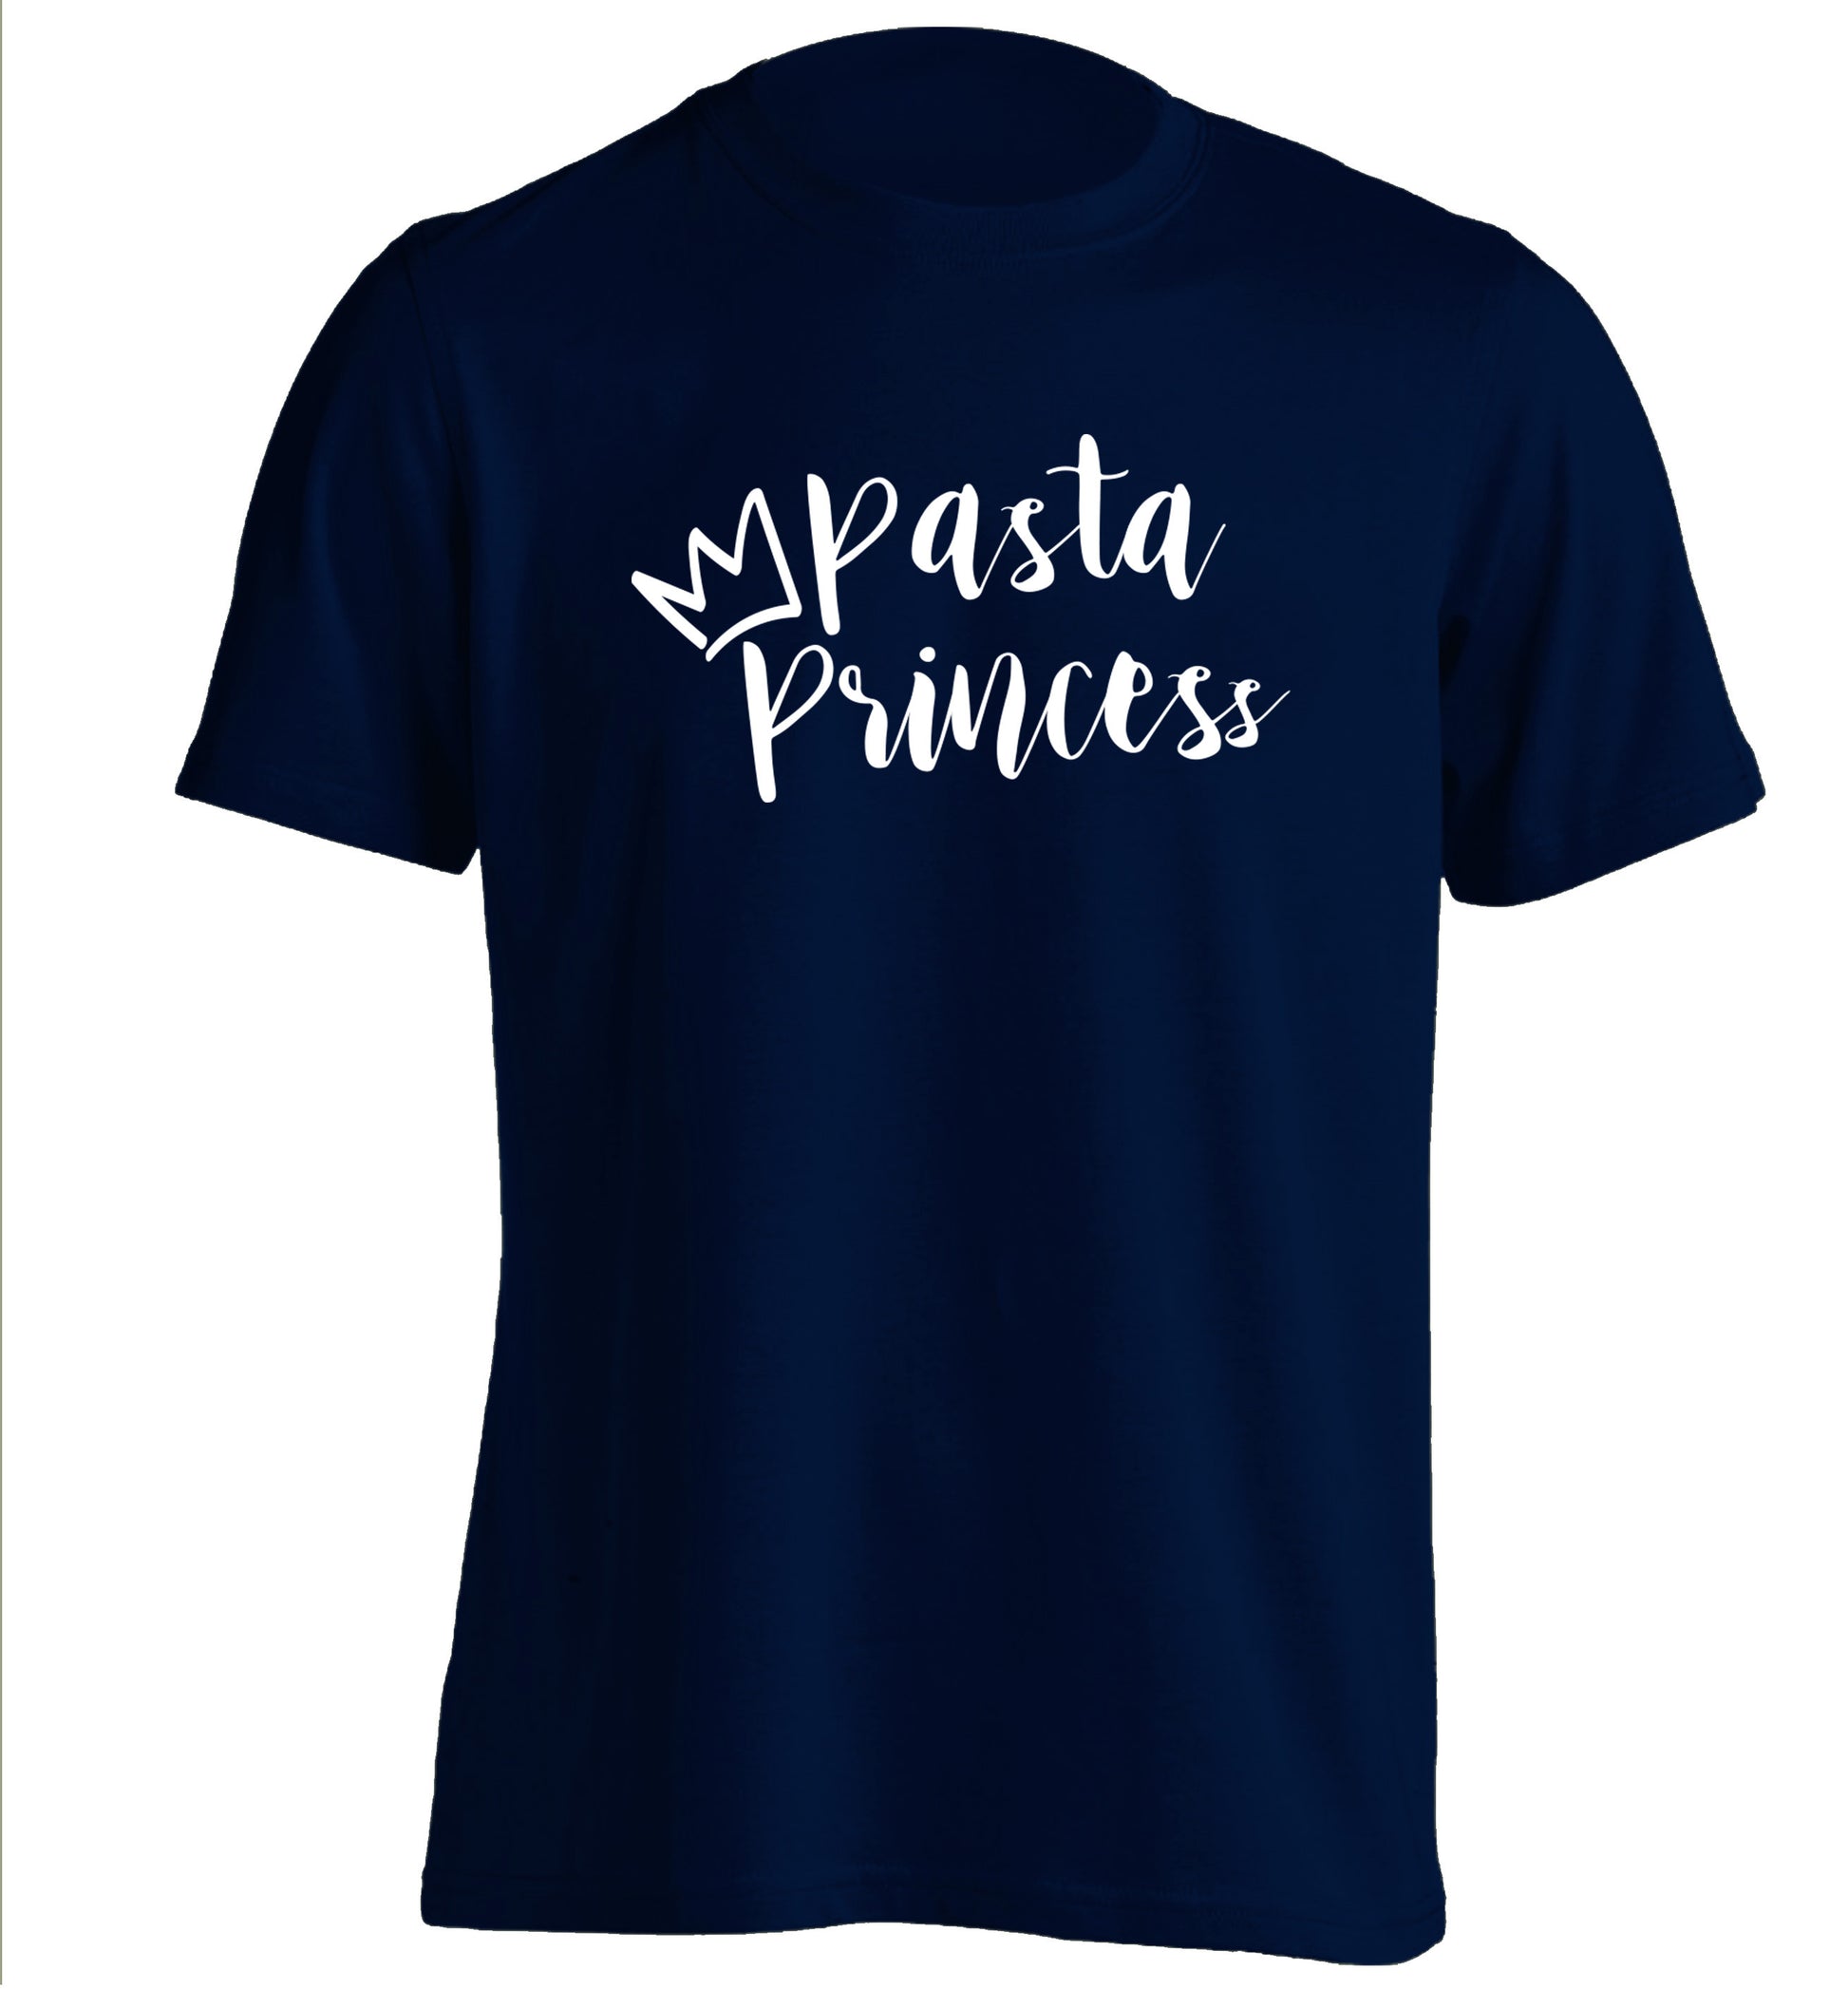 Pasta Princess adults unisex navy Tshirt 2XL